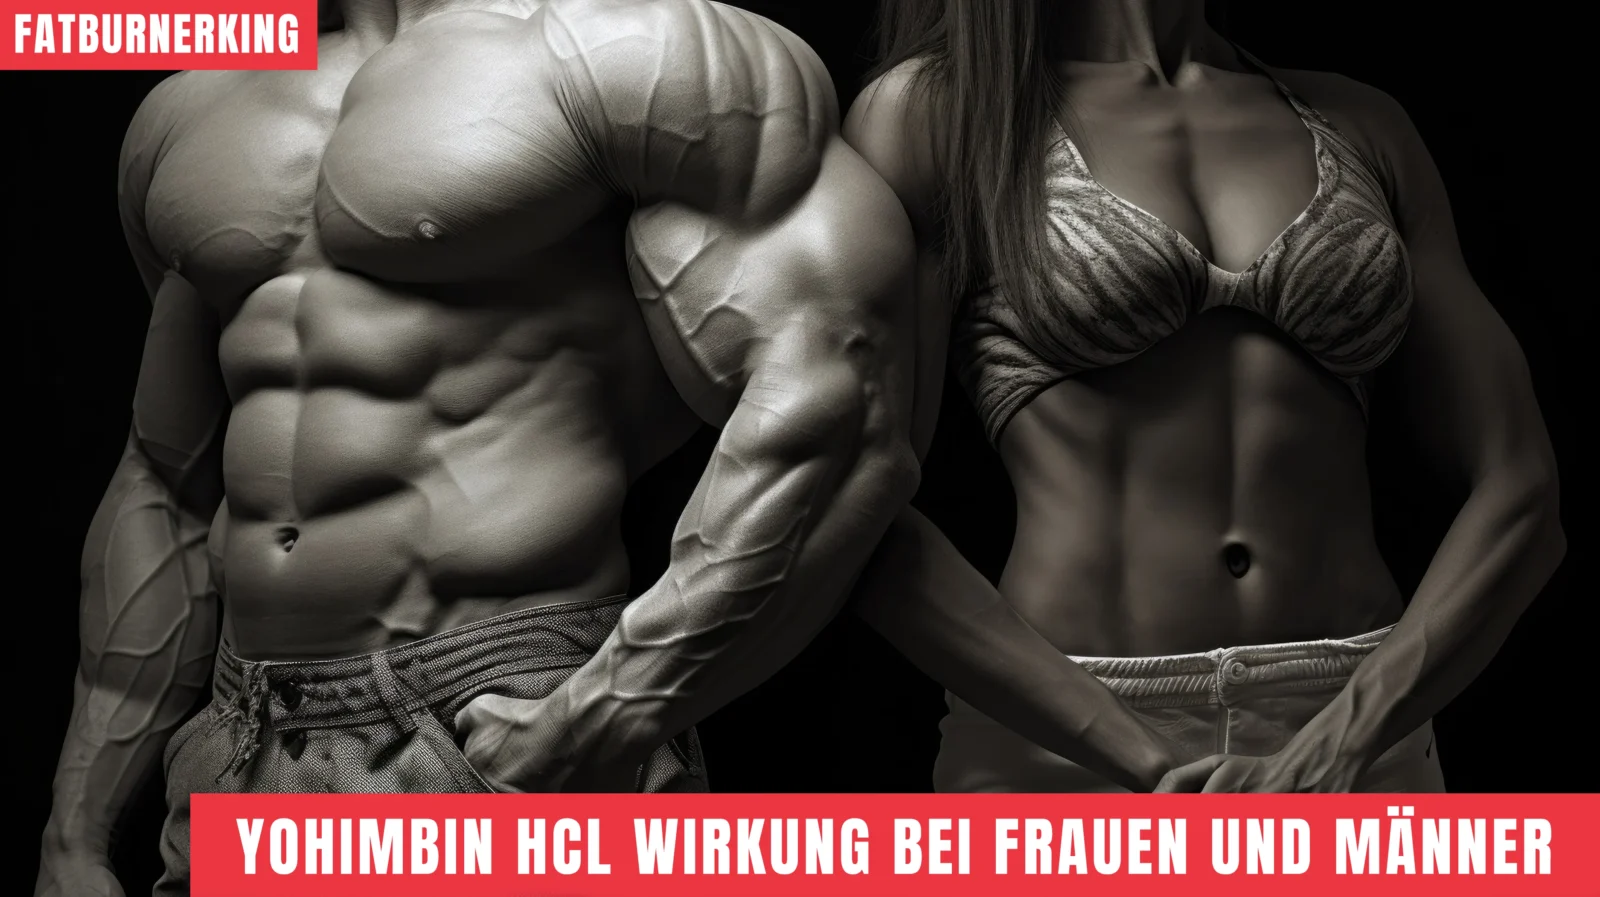 Yohimbine HCL effect in women and men